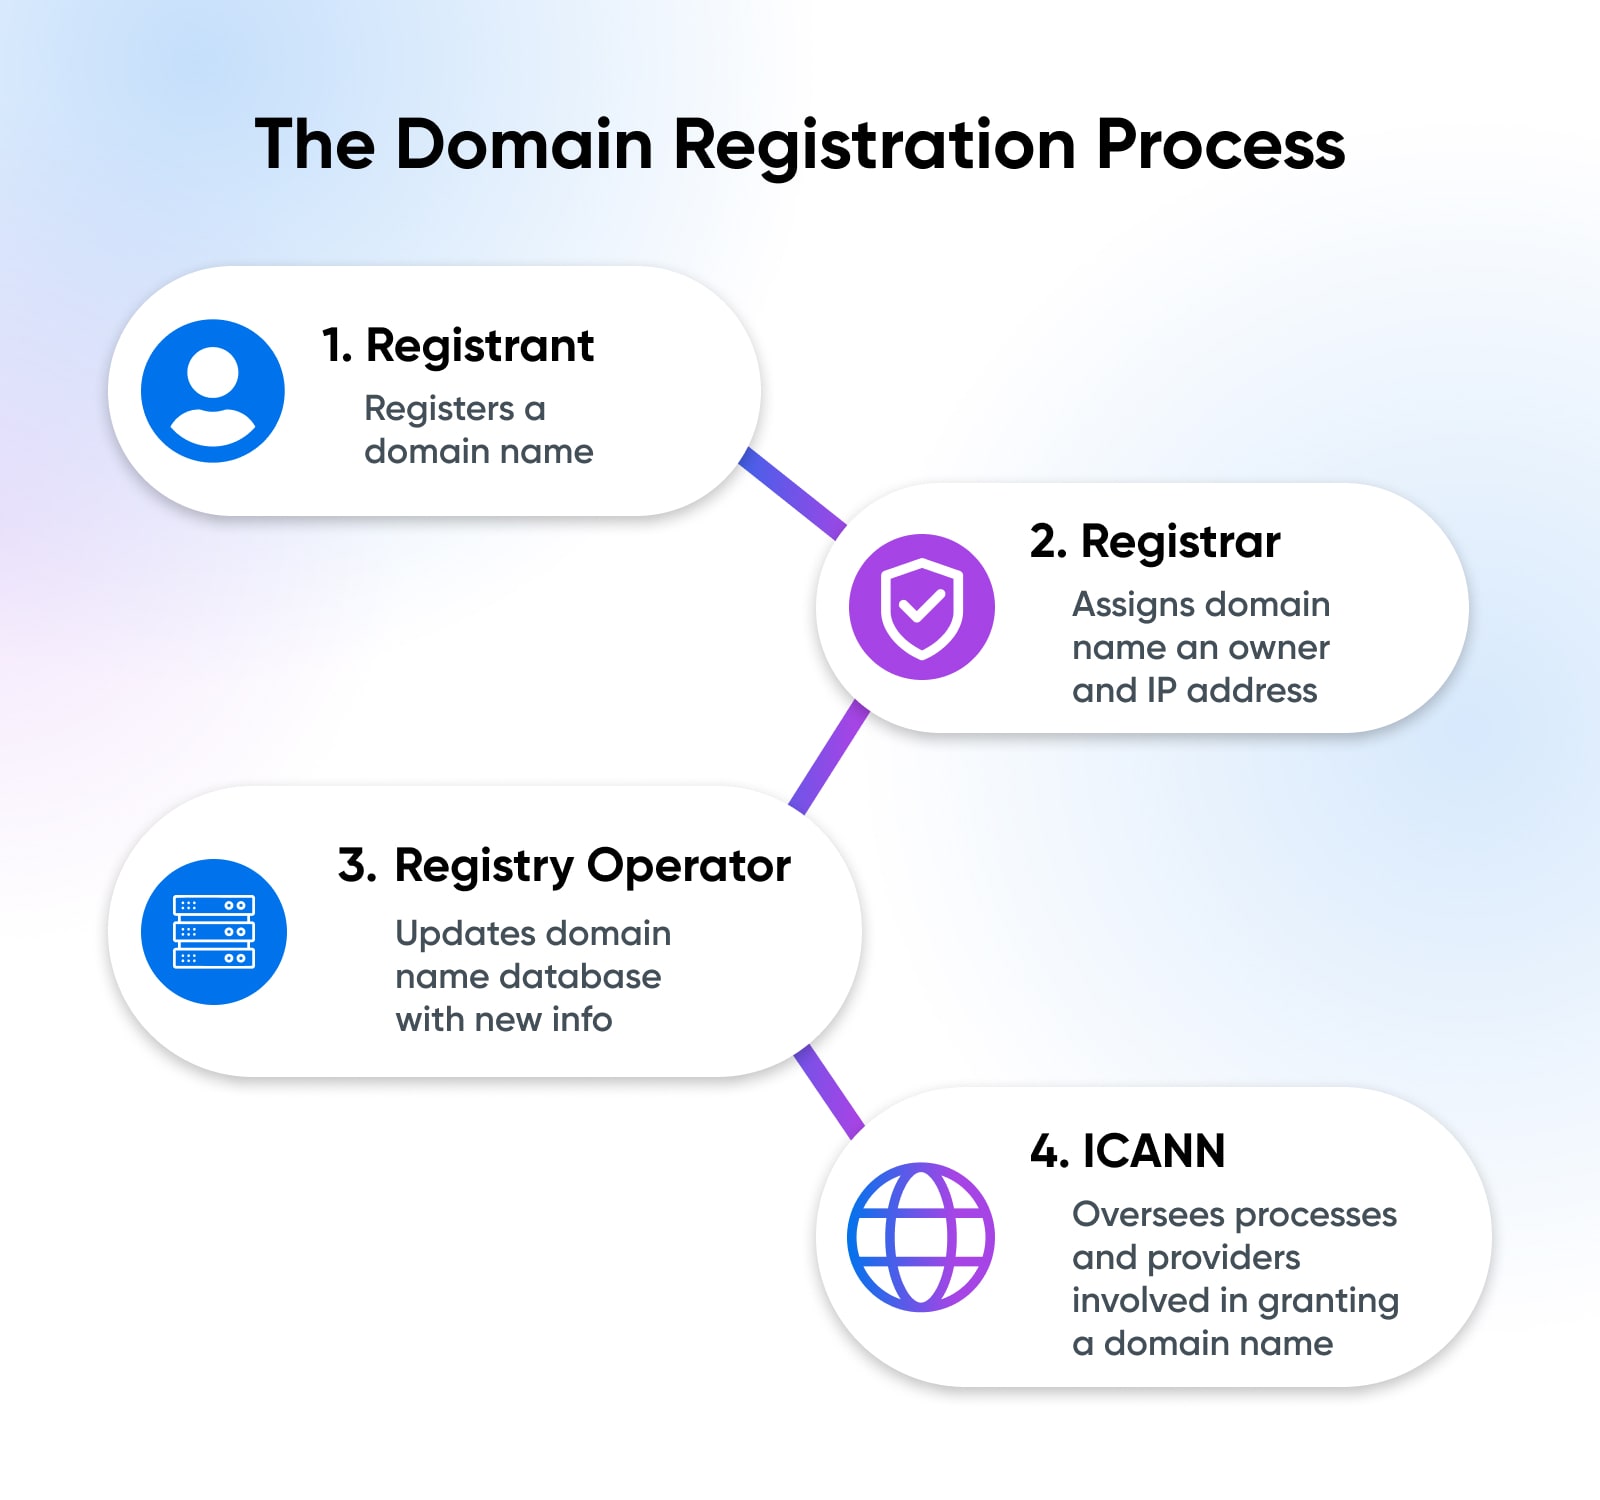 The Domain Registration Process